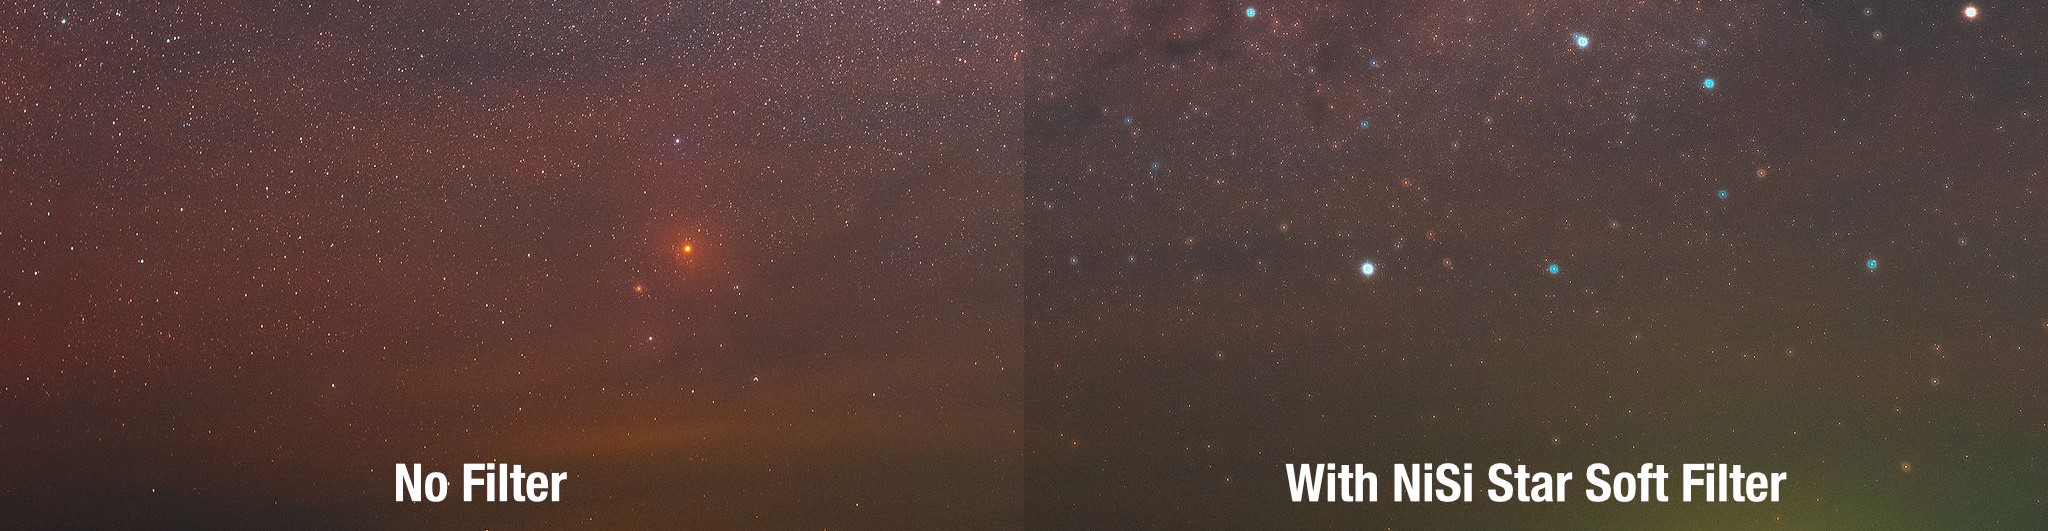 NISI Filtro Quadrado Star Soft Astrofotografia 150x170mm